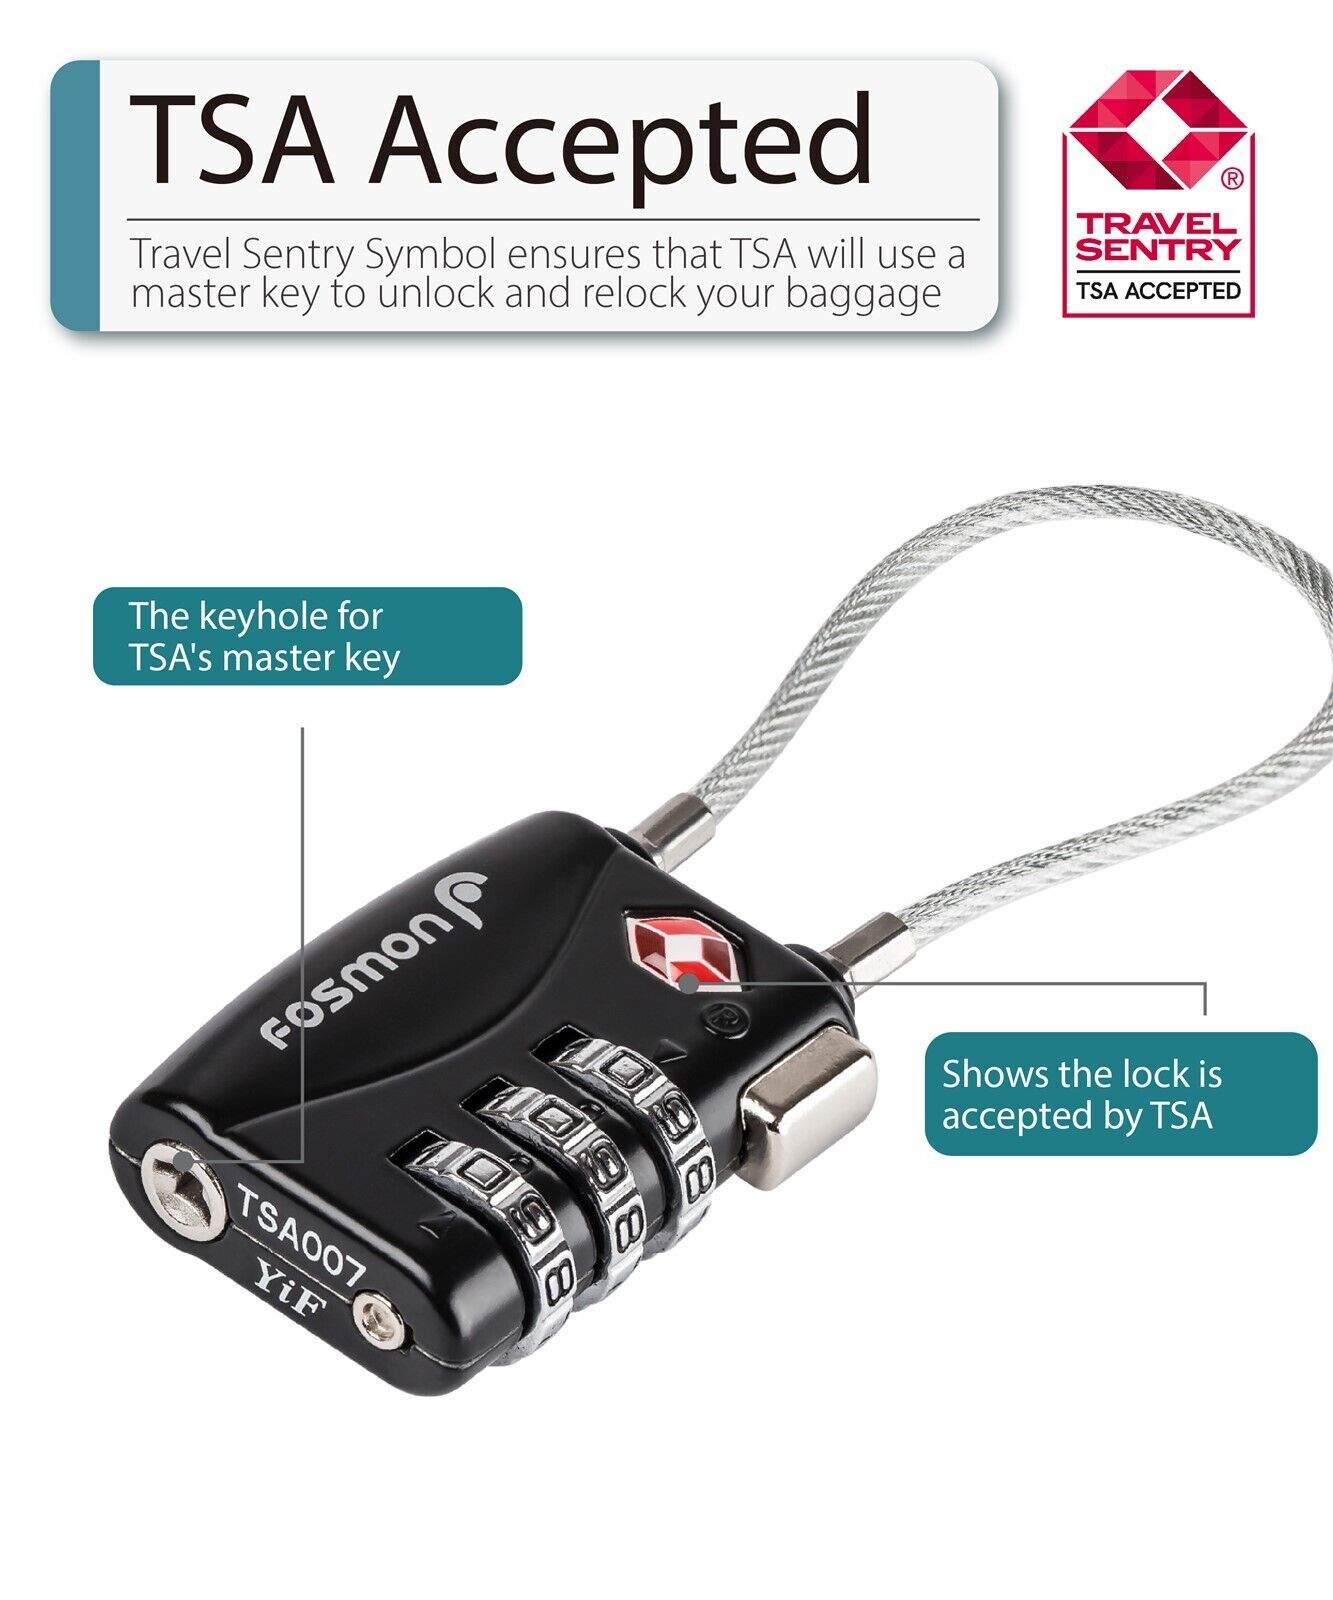 TSA Accepted Luggage Travel Suitcase Bag Lock 3 Digit Combination Padlock Reset